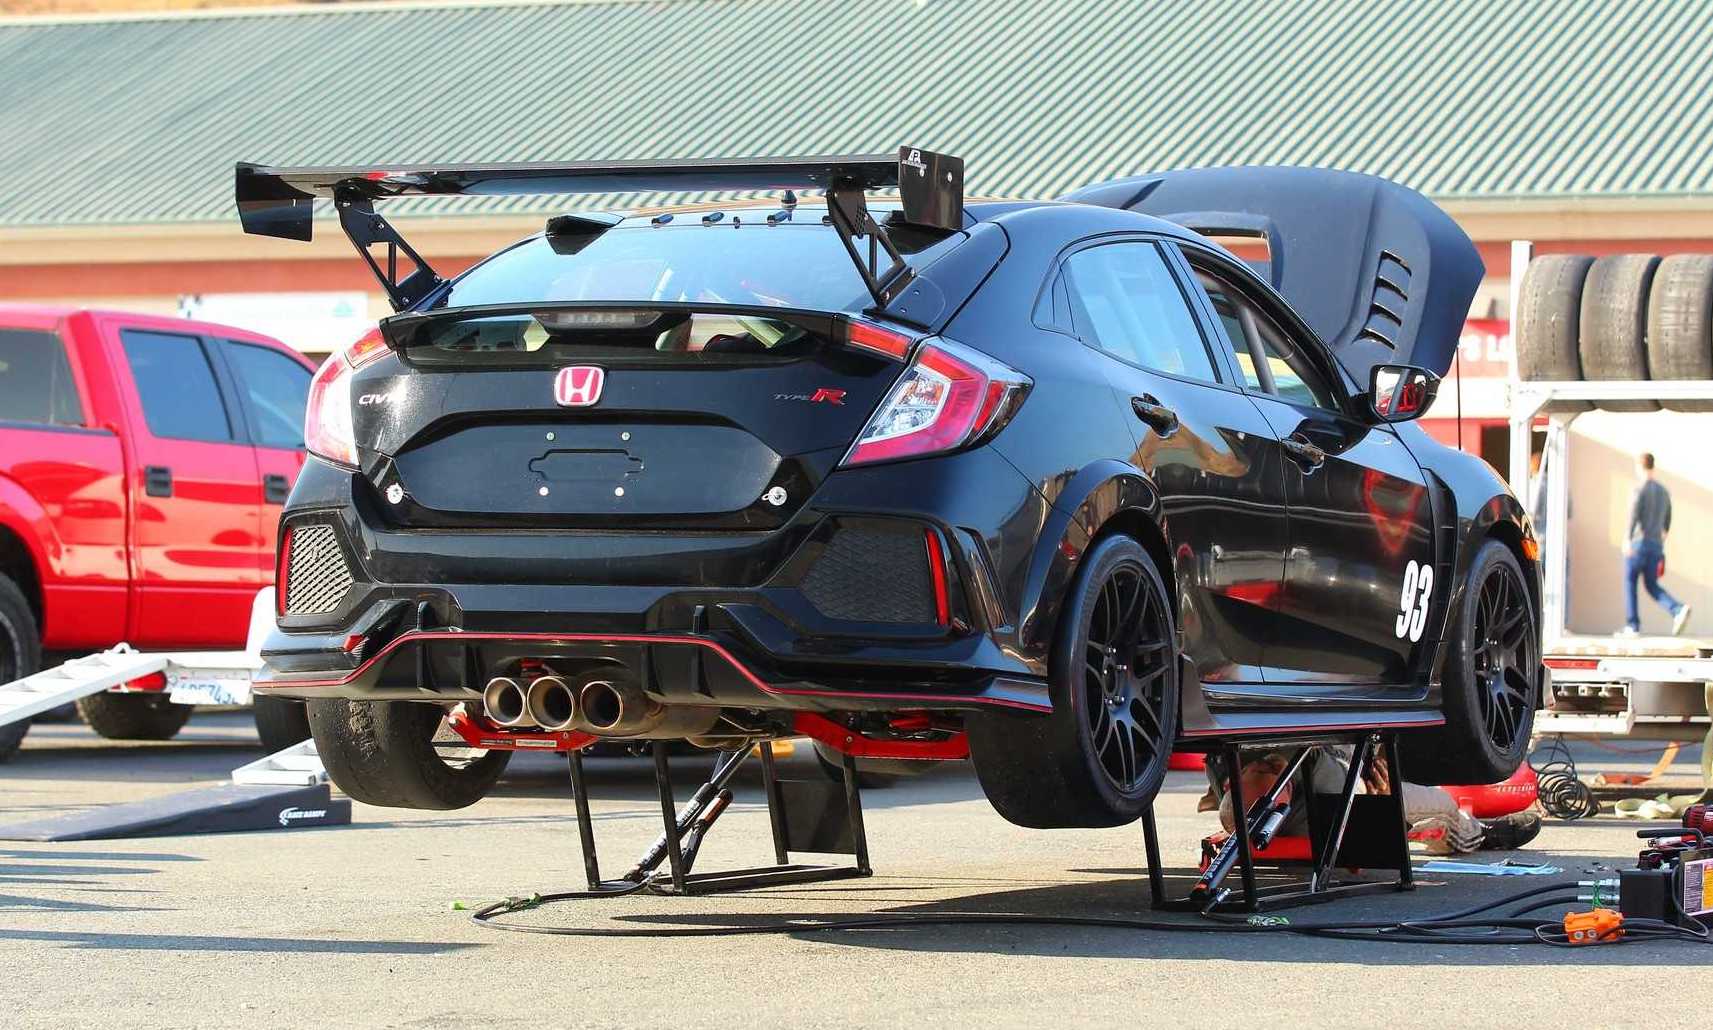 Honda Announces Civic Type R Tc Customer Racing Car